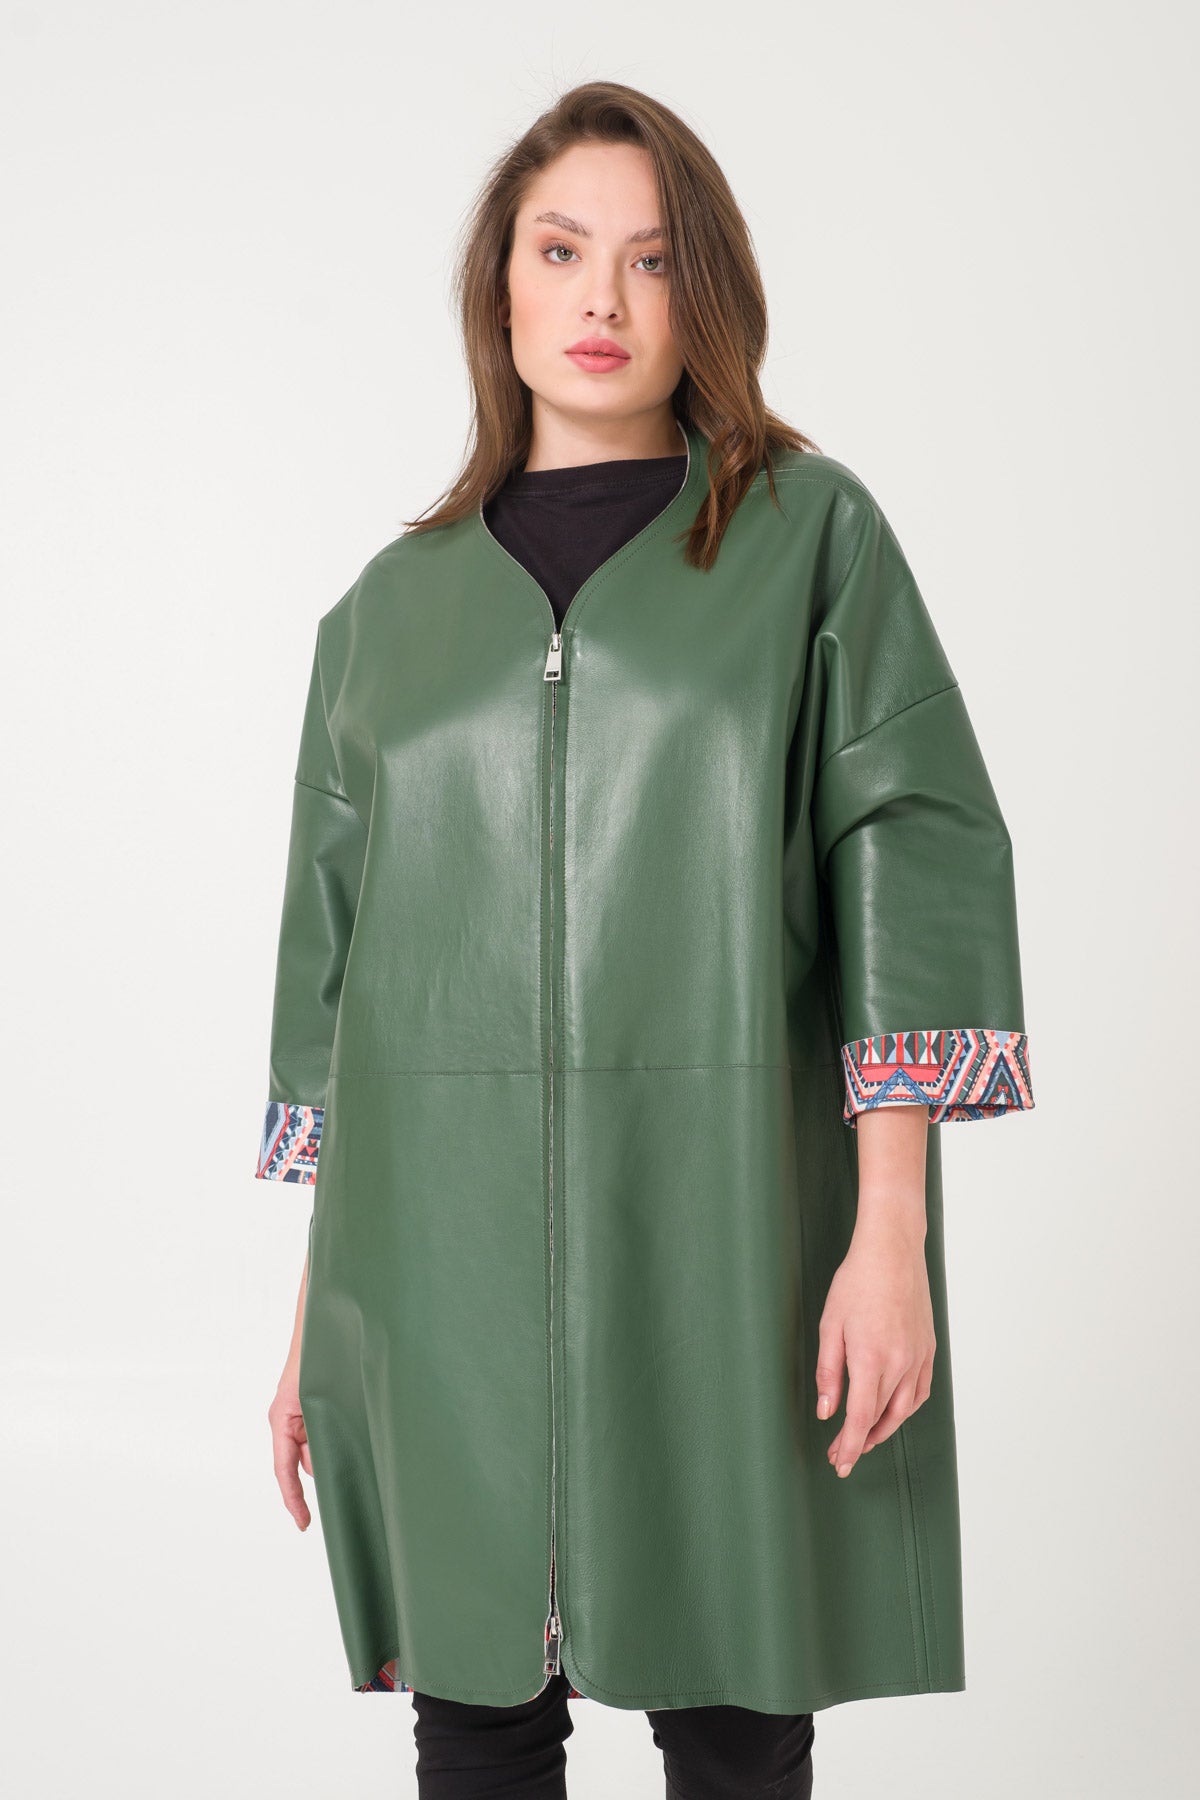 Dark Green Leather Coat